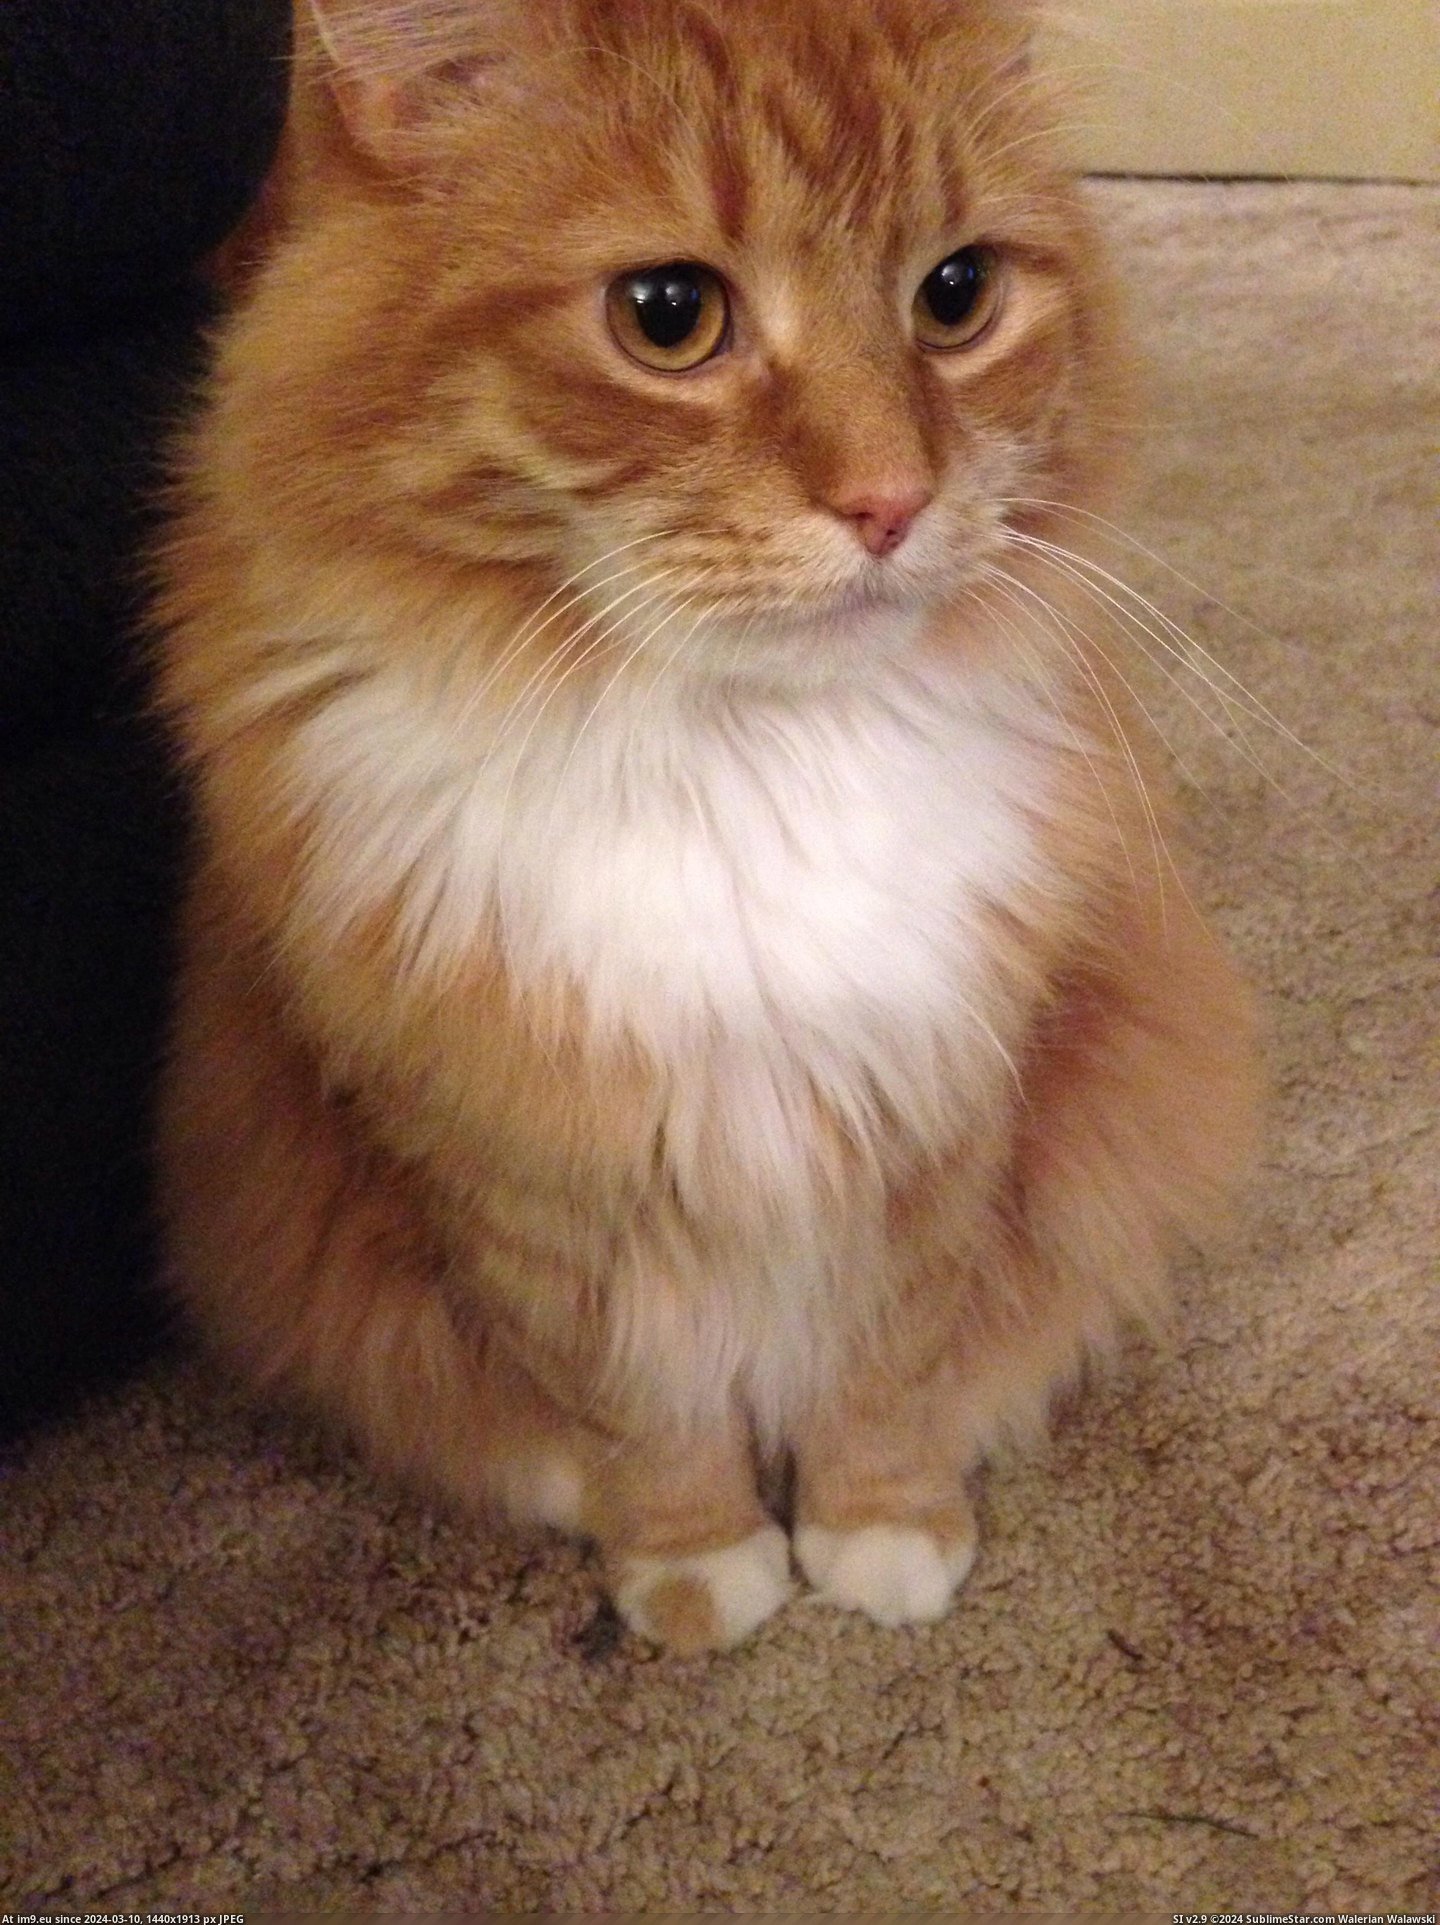 #One #Orange #Toe #Cat [Mildlyinteresting] My cat has one orange toe 2 Pic. (Bild von album My r/MILDLYINTERESTING favs))